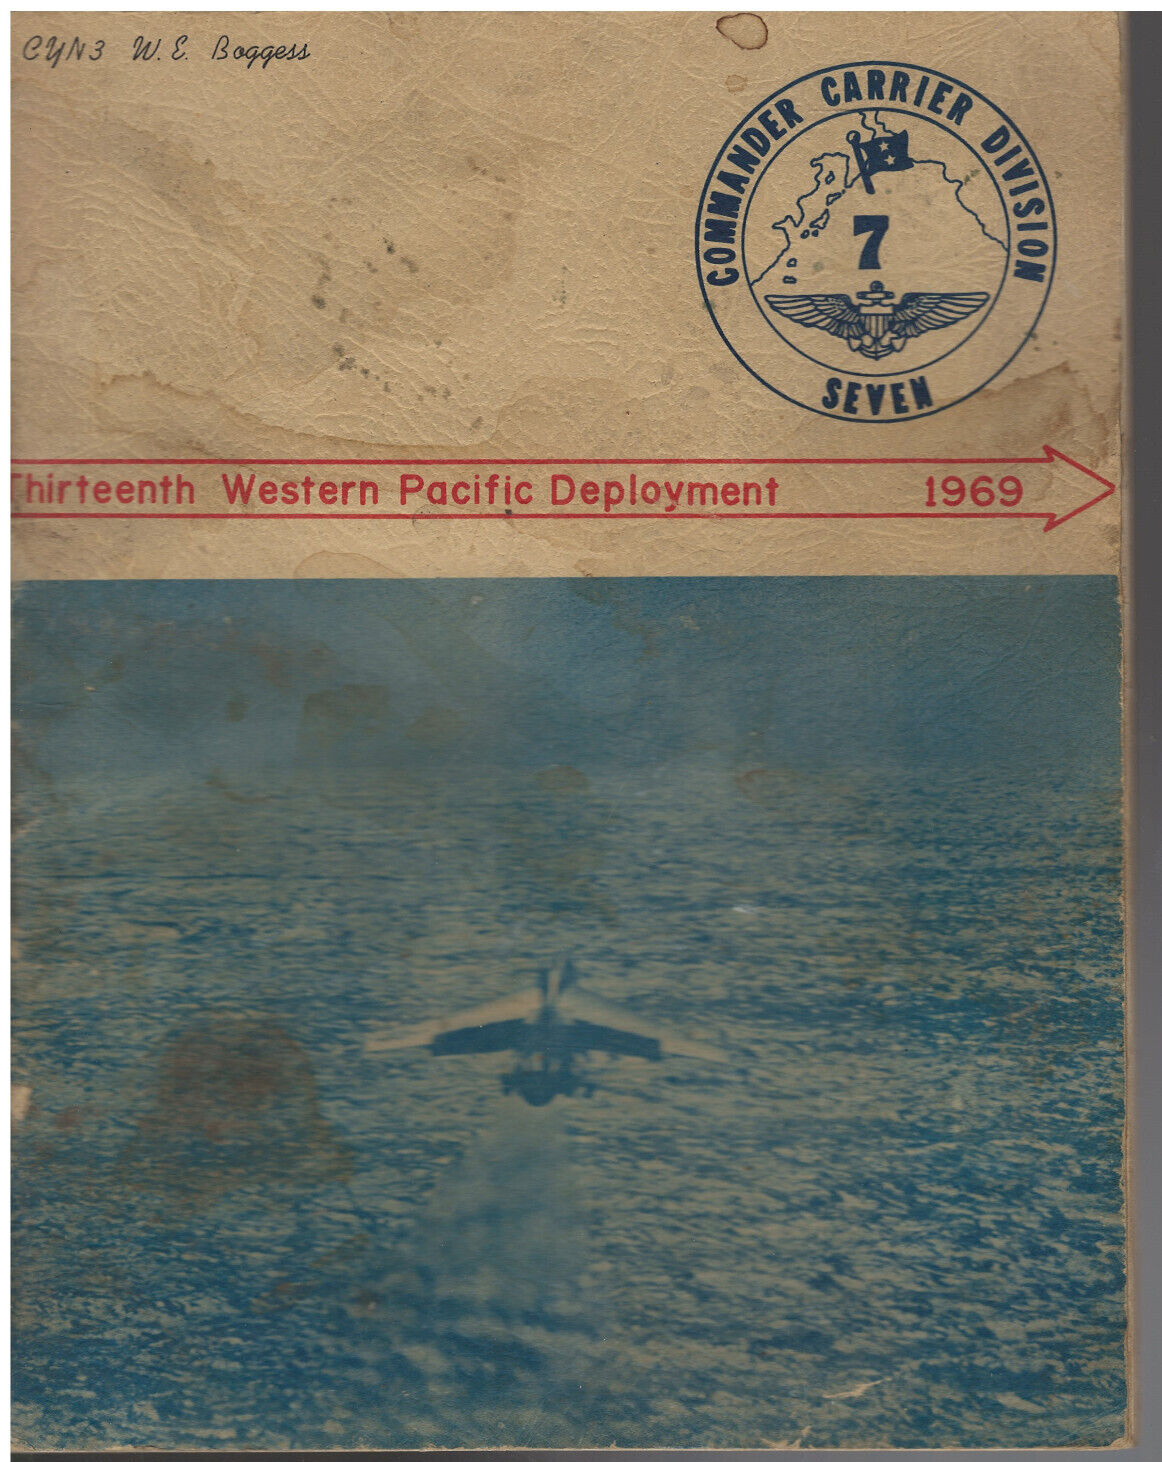 1969 thirteenth  Western Pacific Deployment commander carrier division 7